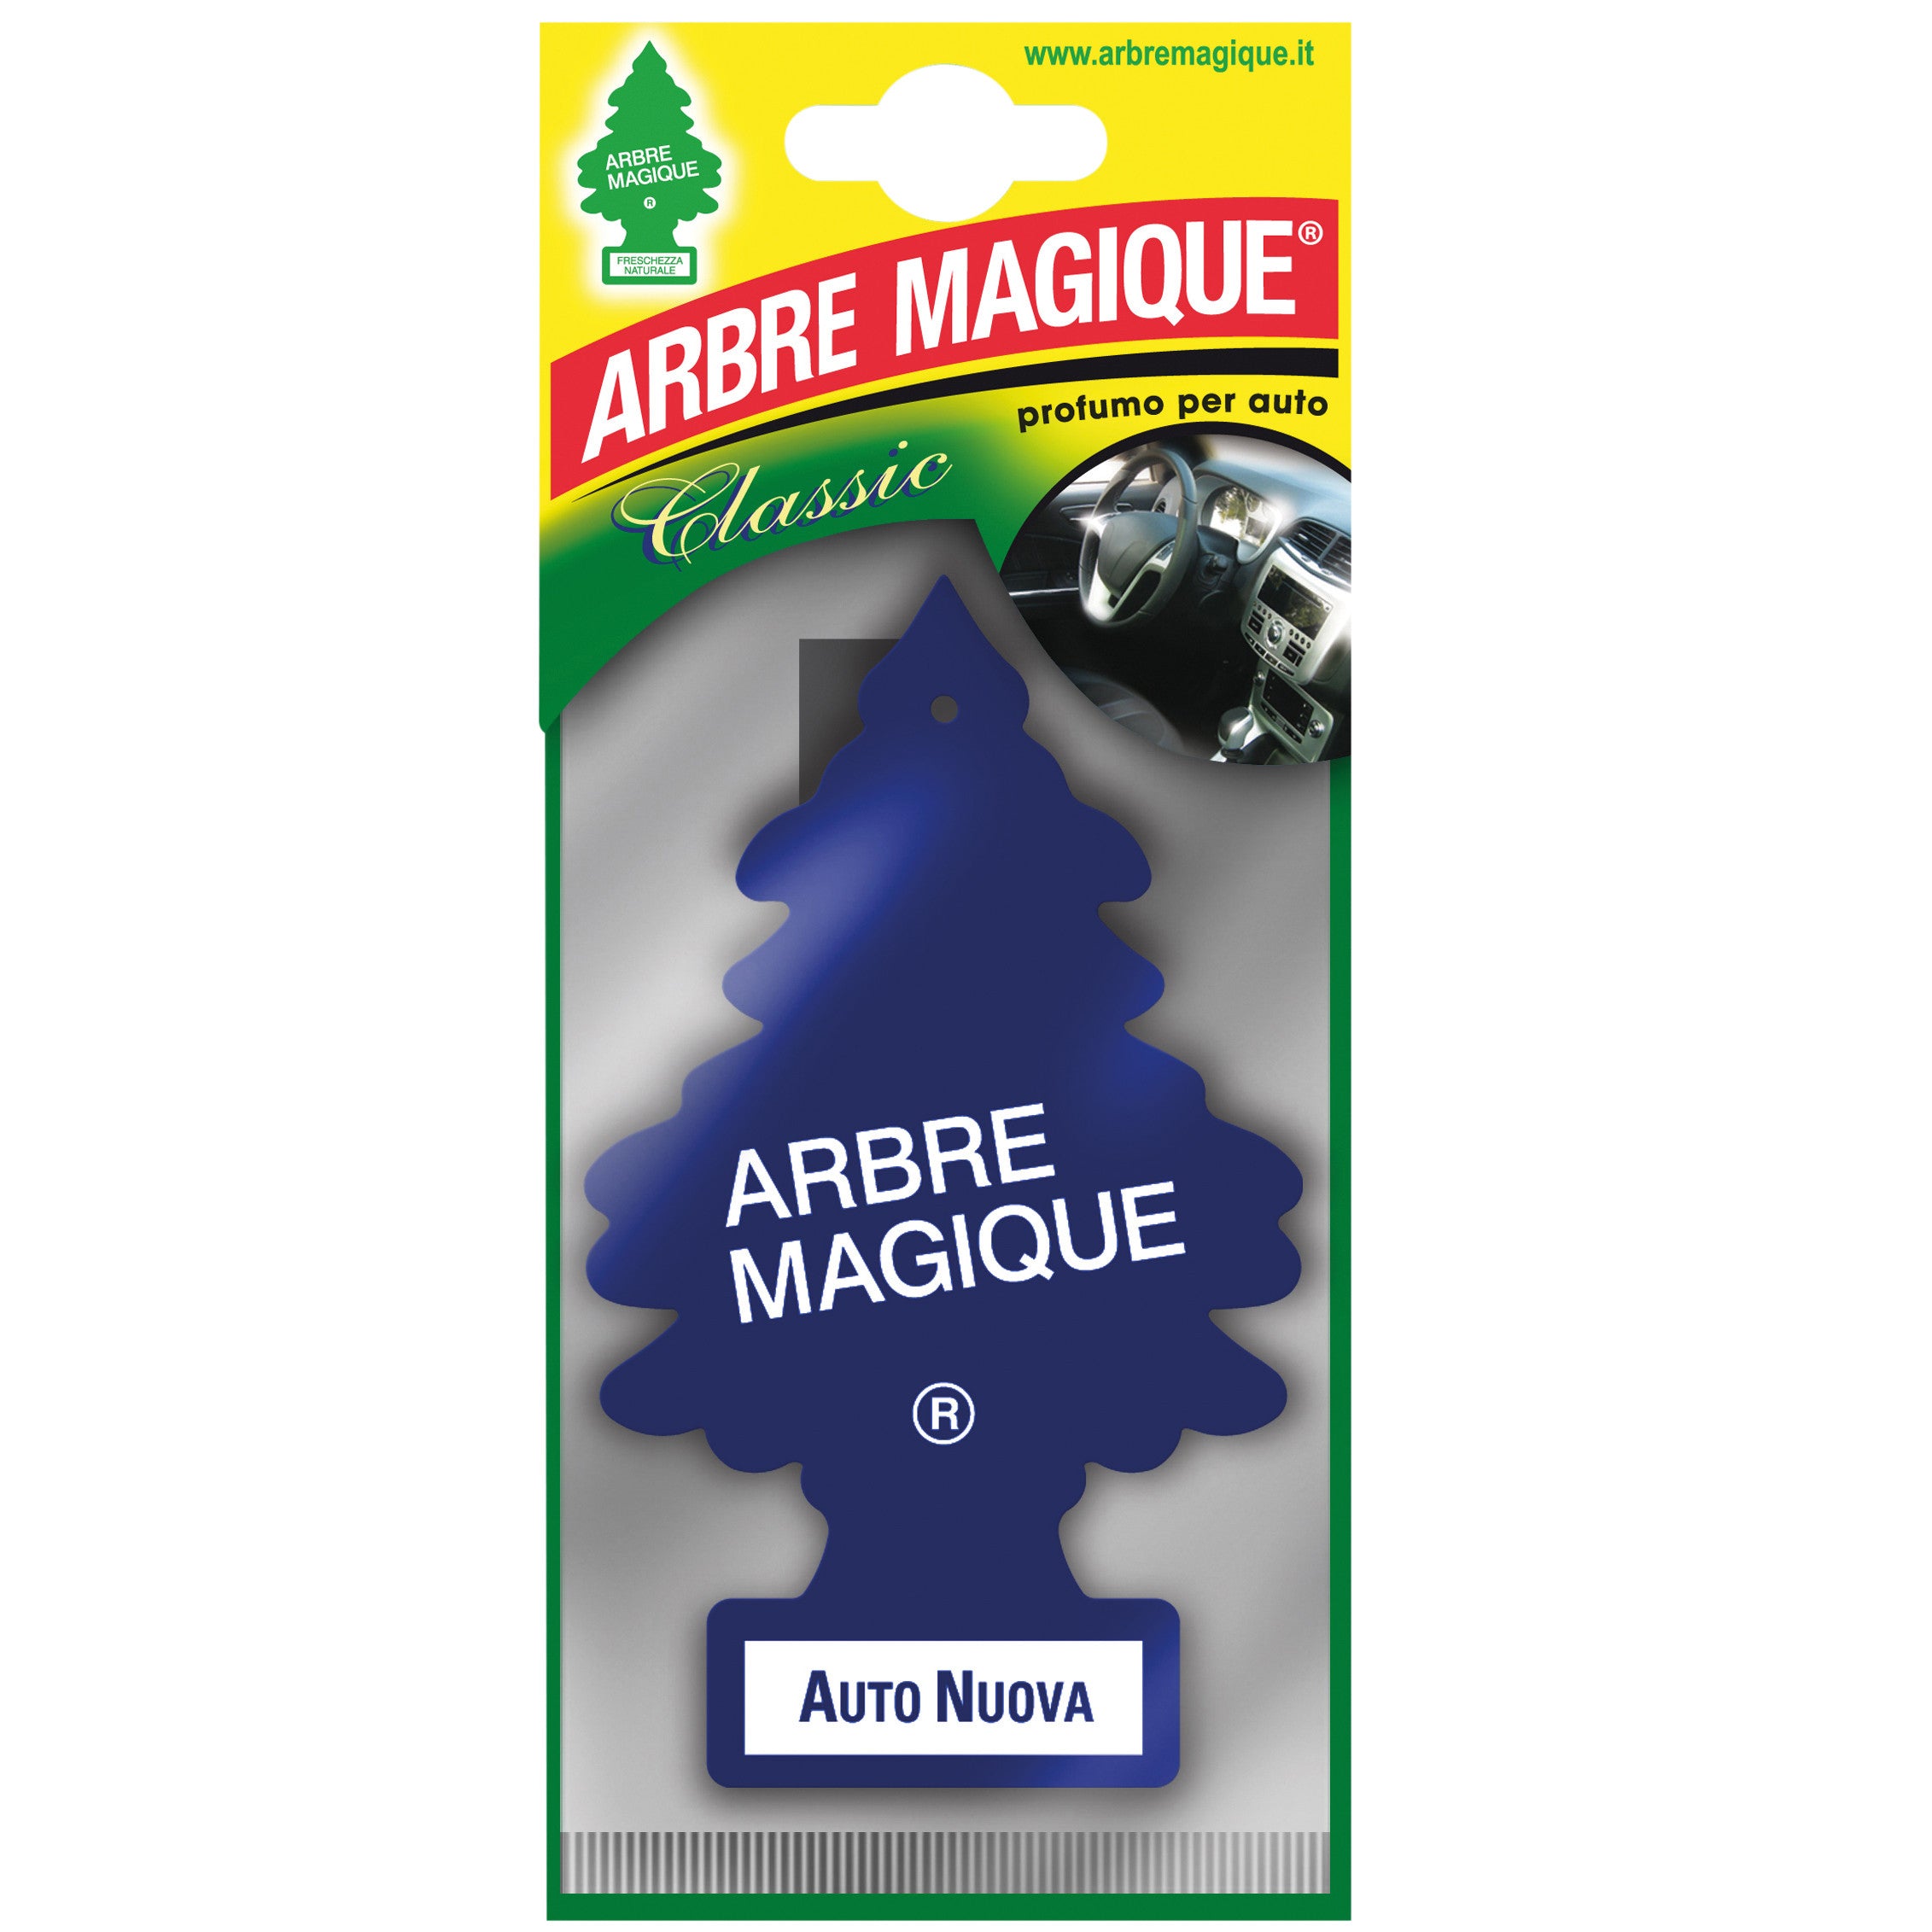 Arbre magique classic autonuova